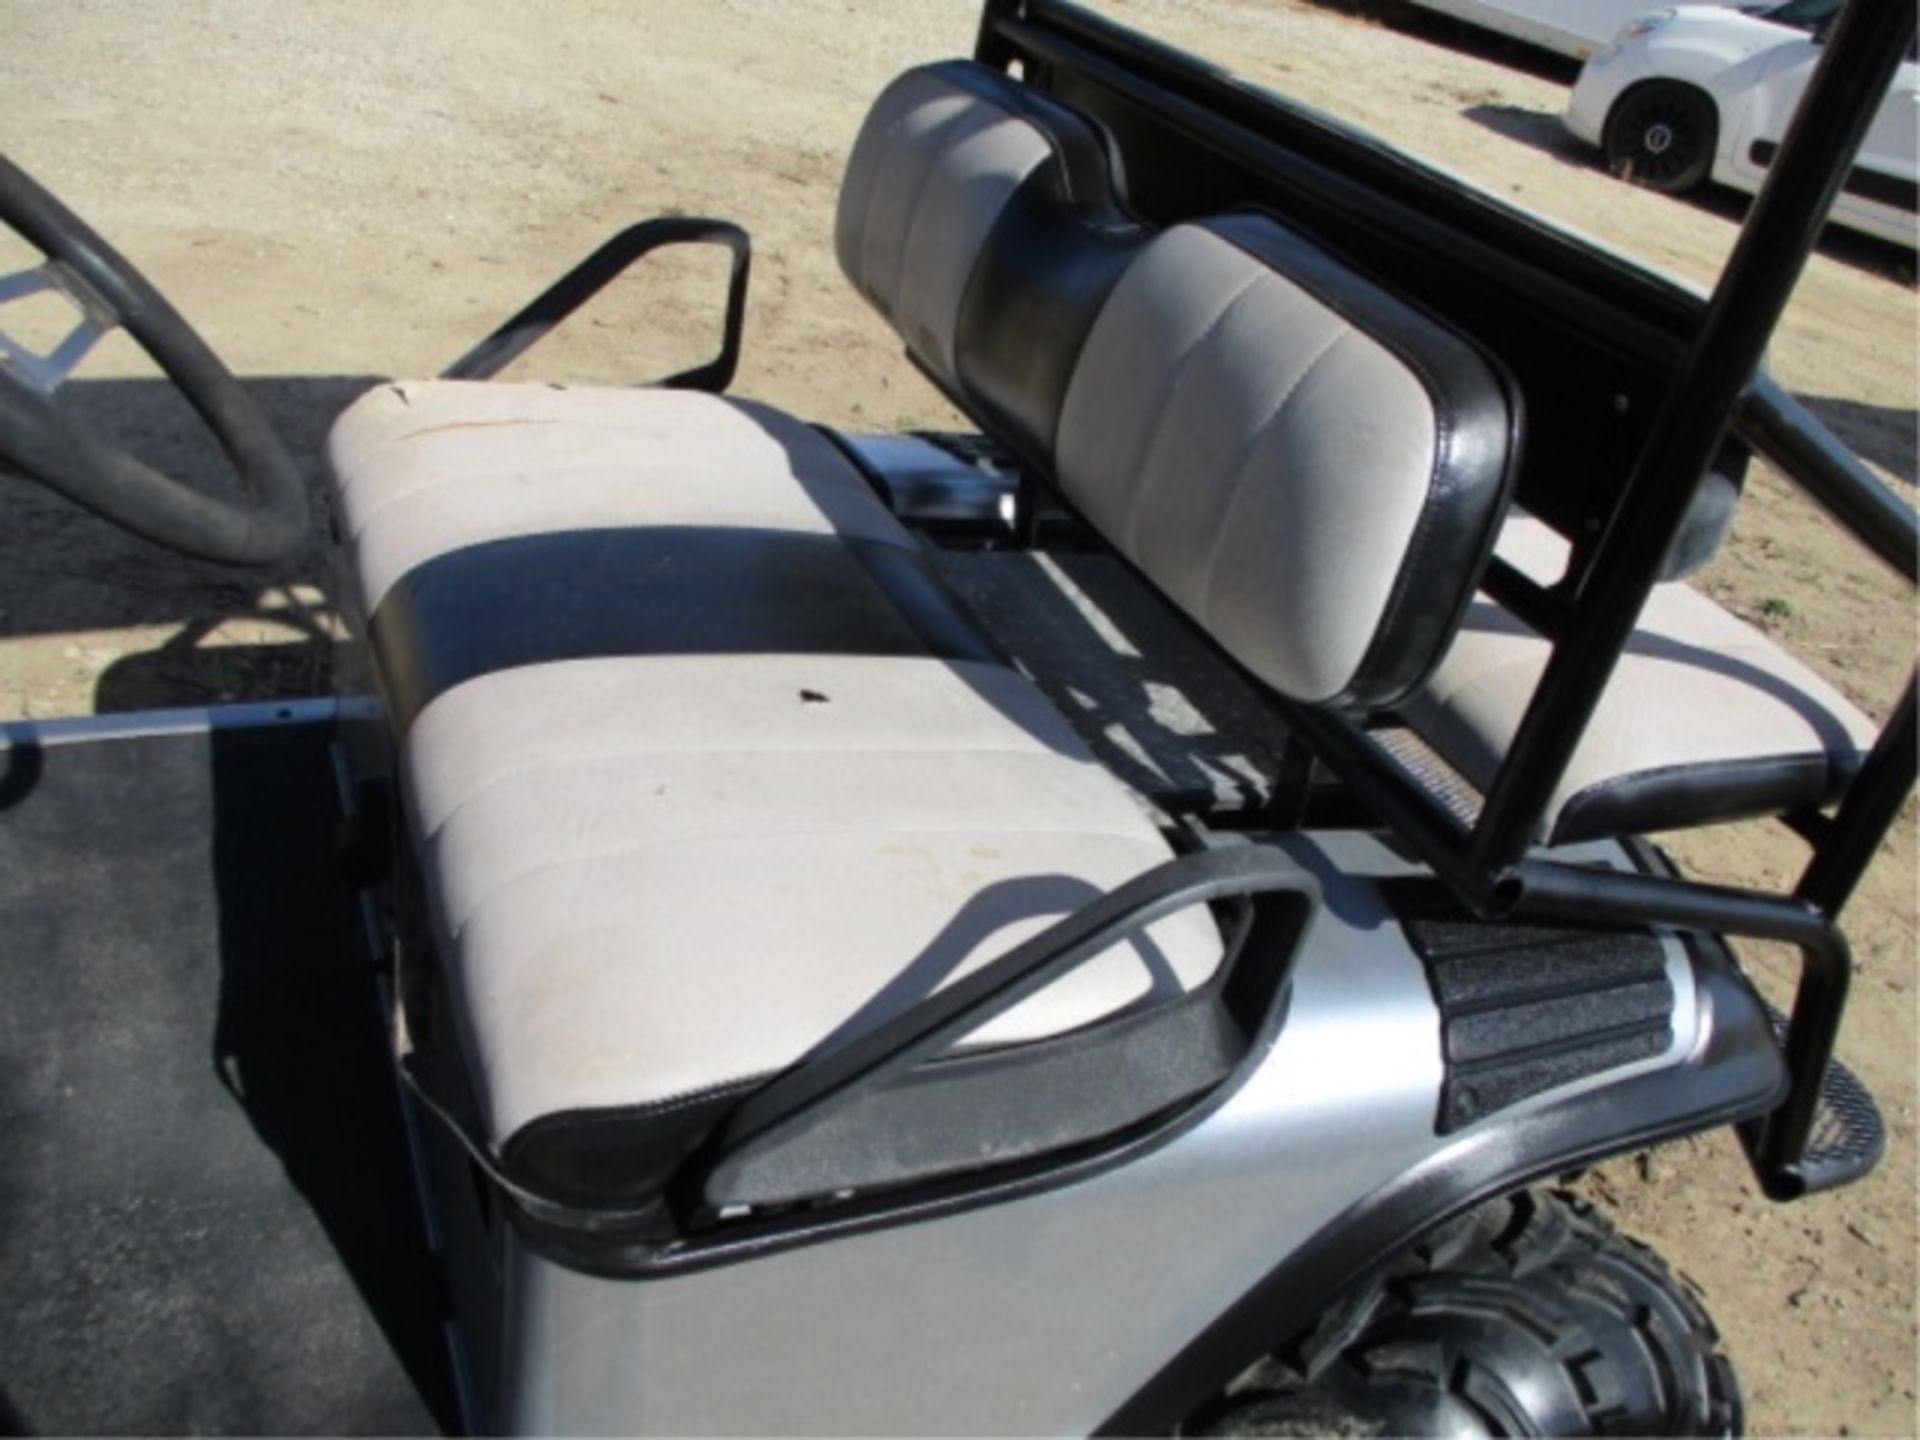 EzGo Golf Cart, 2017 Predator 670cc Gas Engine, Lift Kit, Custom Roll-Cage W/Canopy, S/N: 912224 - Image 17 of 39